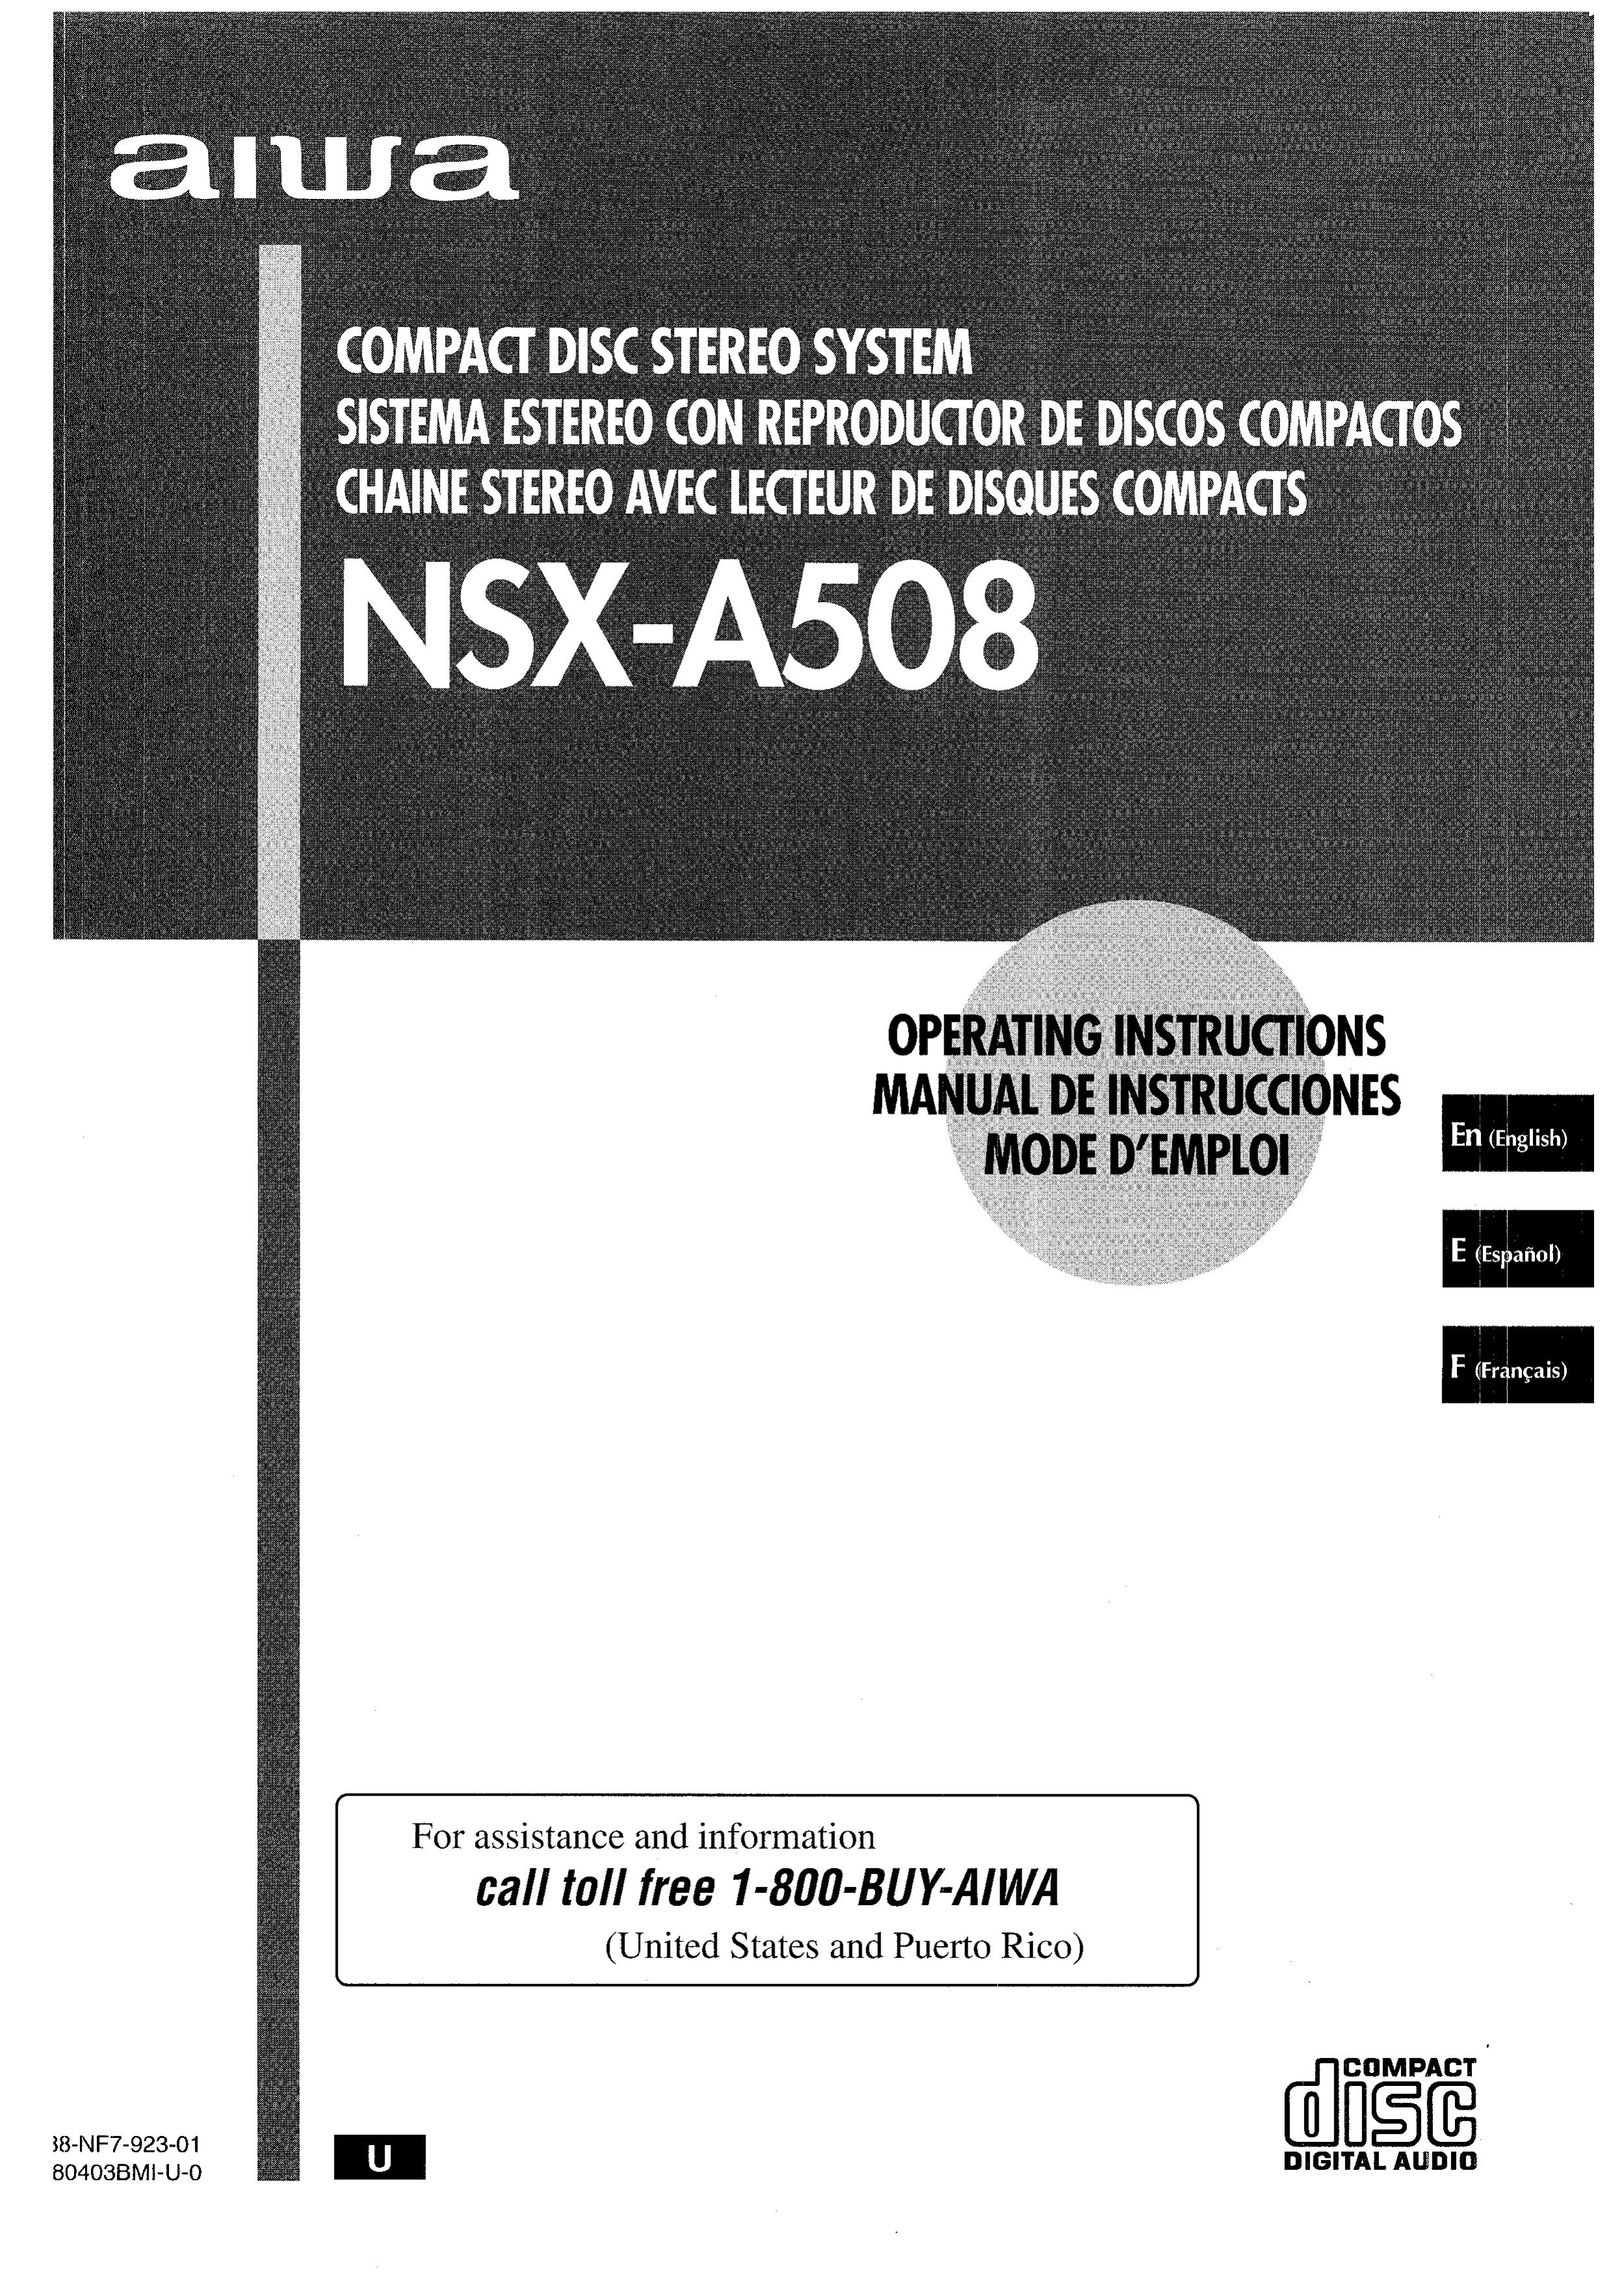 Aiwa NSX-A508 CD Player User Manual